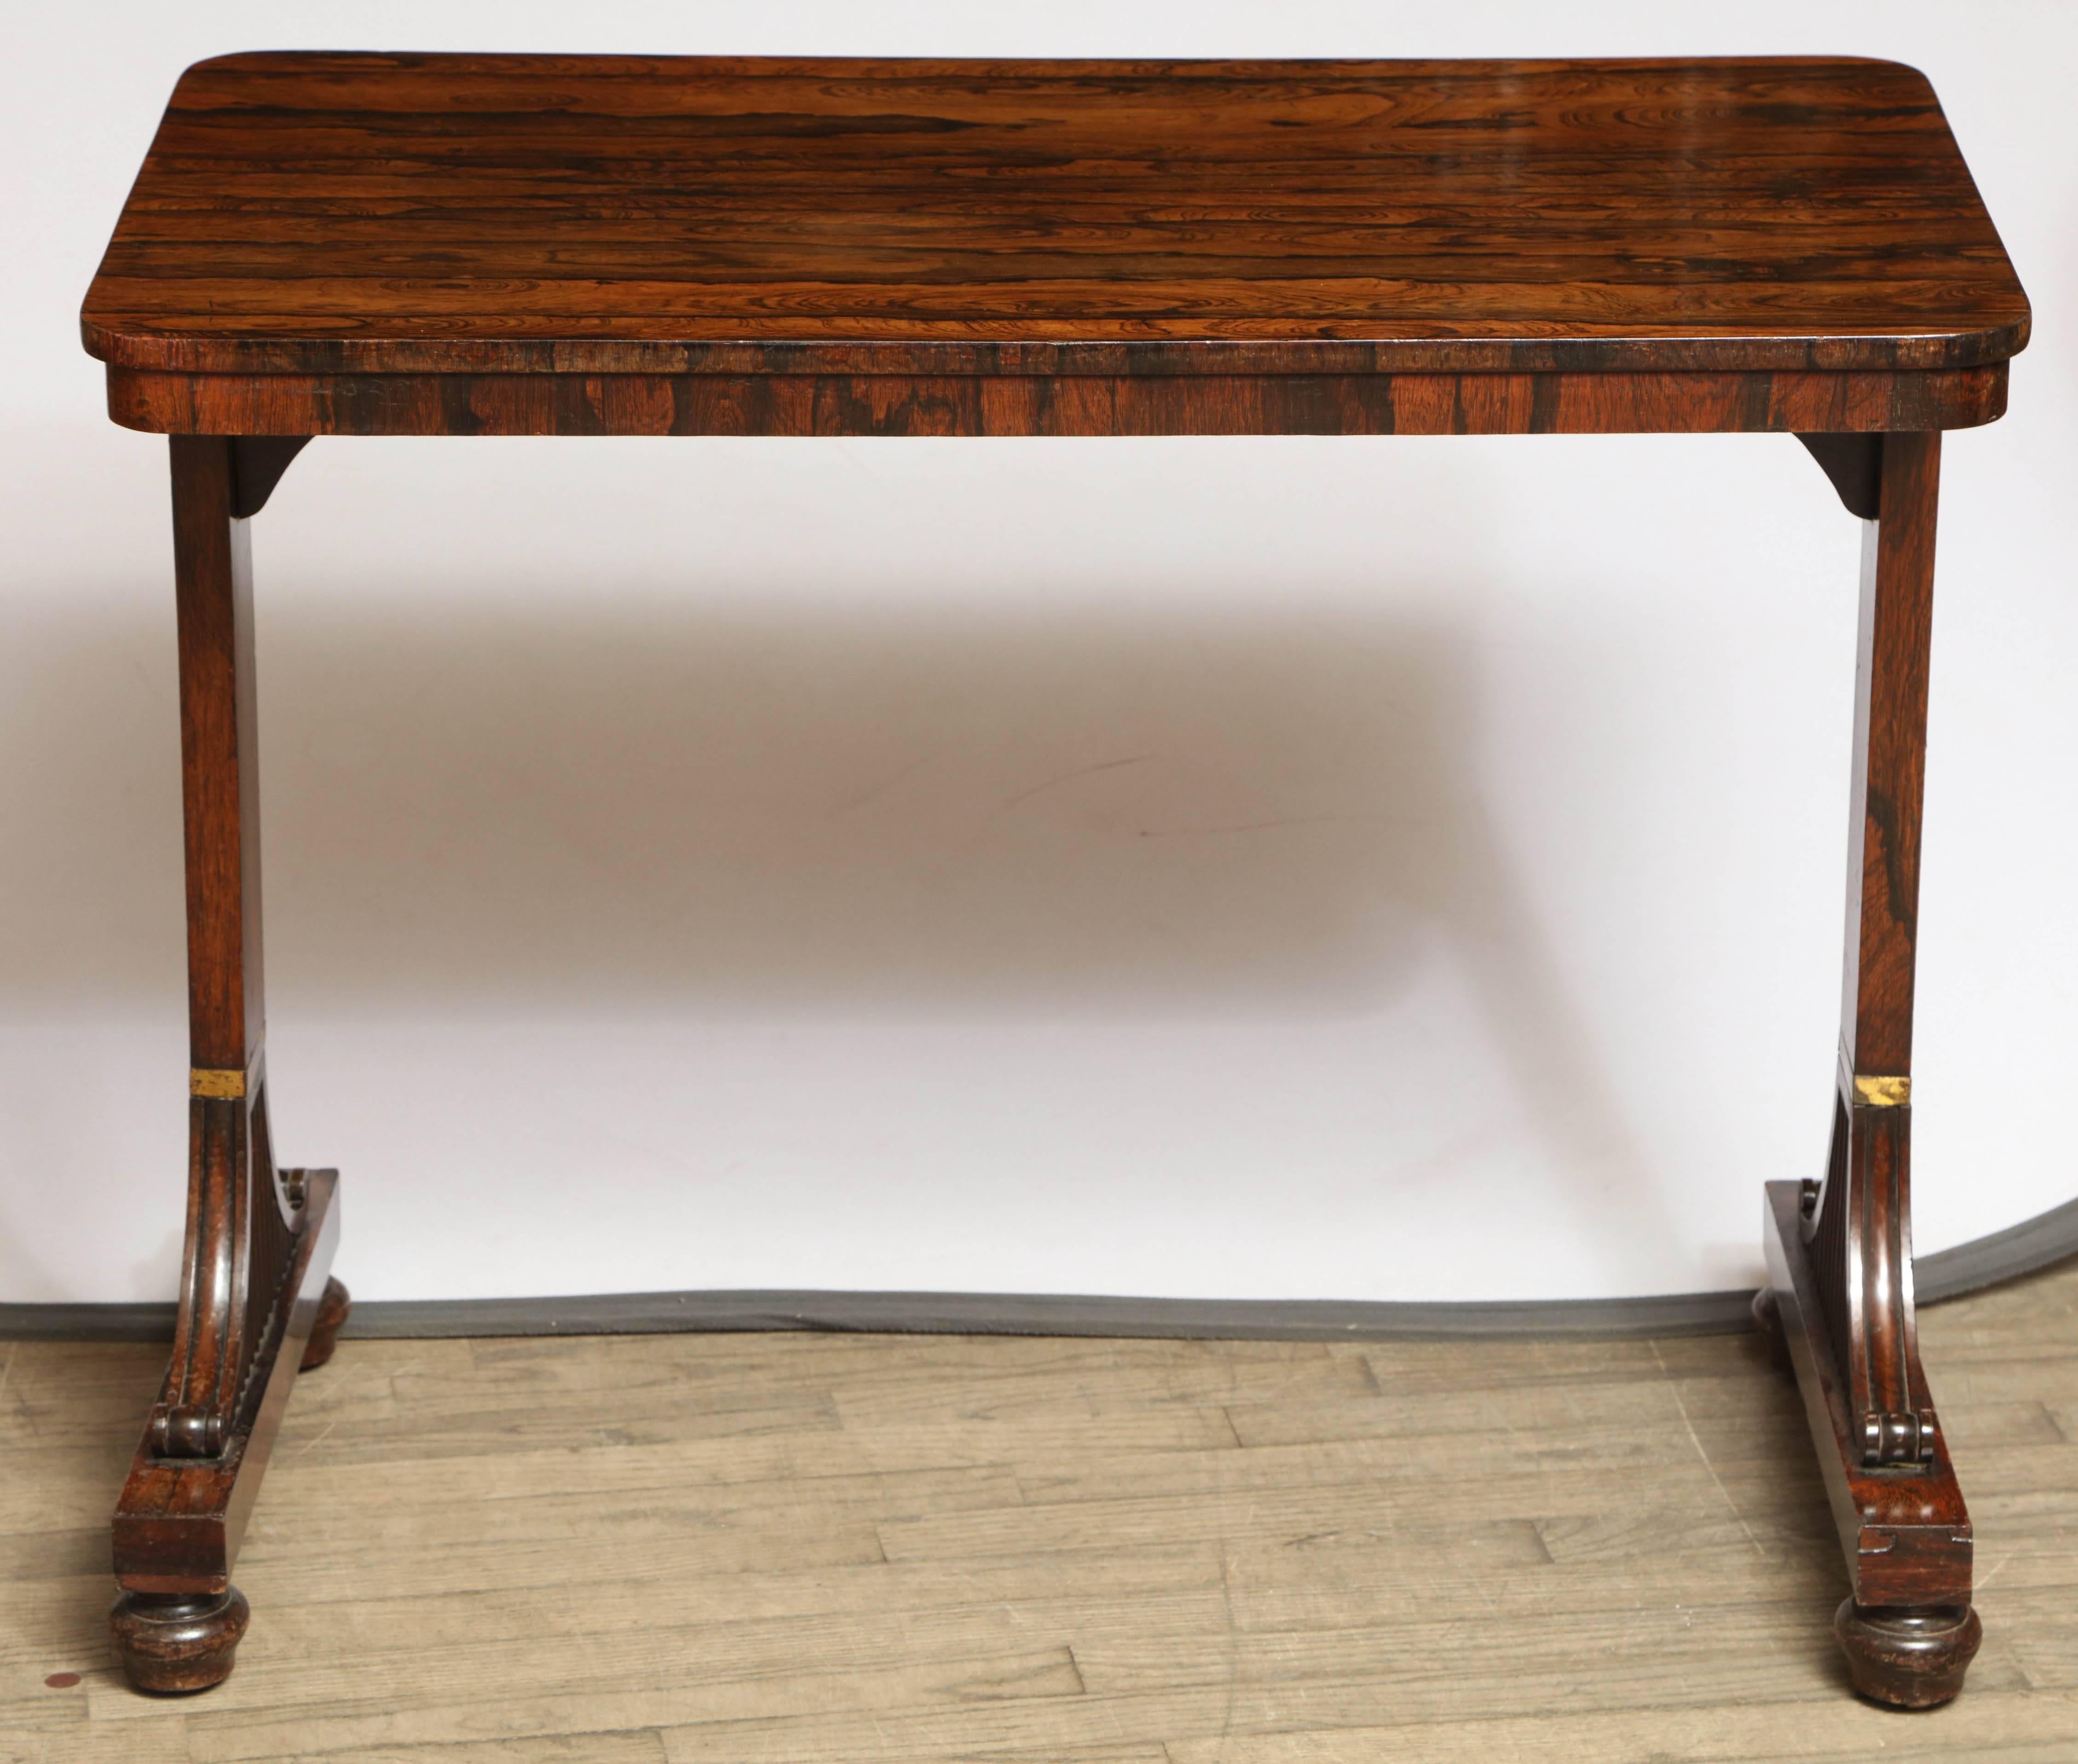 Rosewood regency table, UK, circa 1840.